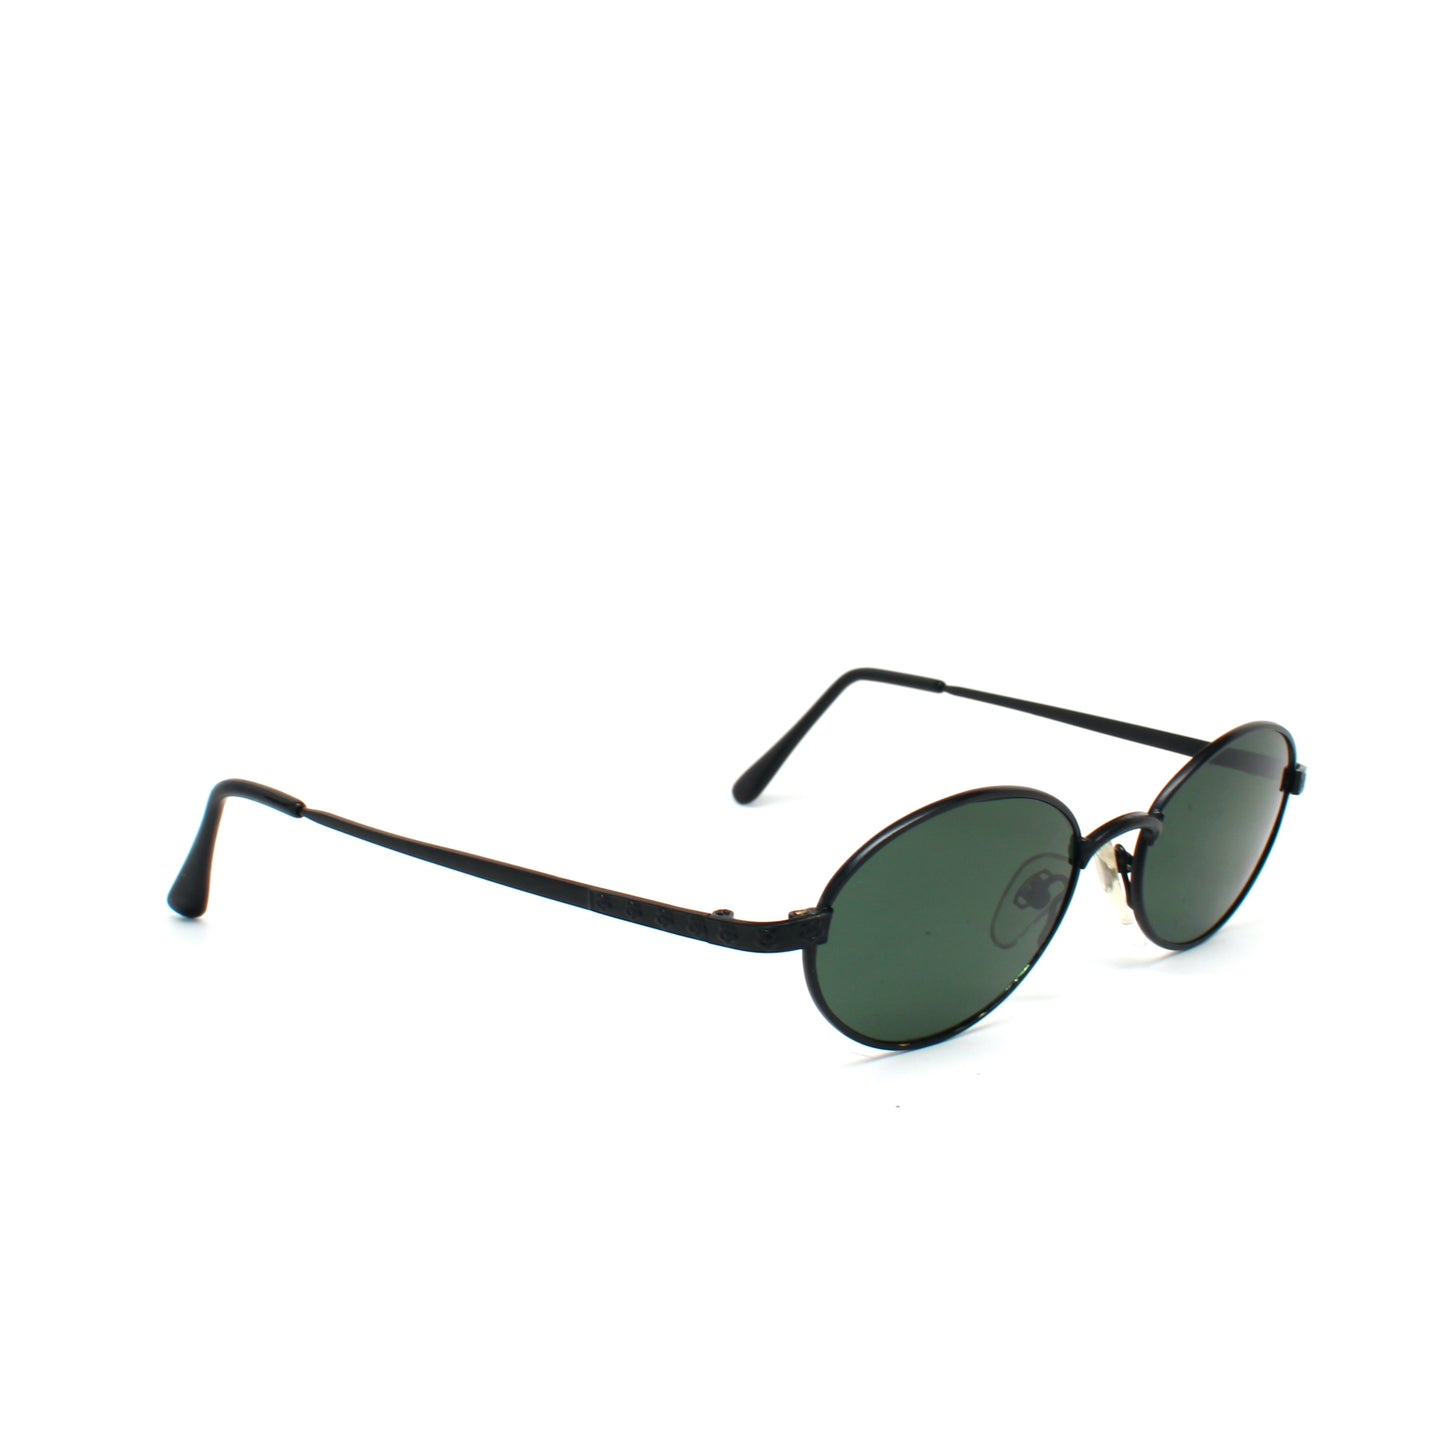 Vintage MINI Small Size 1996 Neo Standard Oval Frame Sunglasses - Black